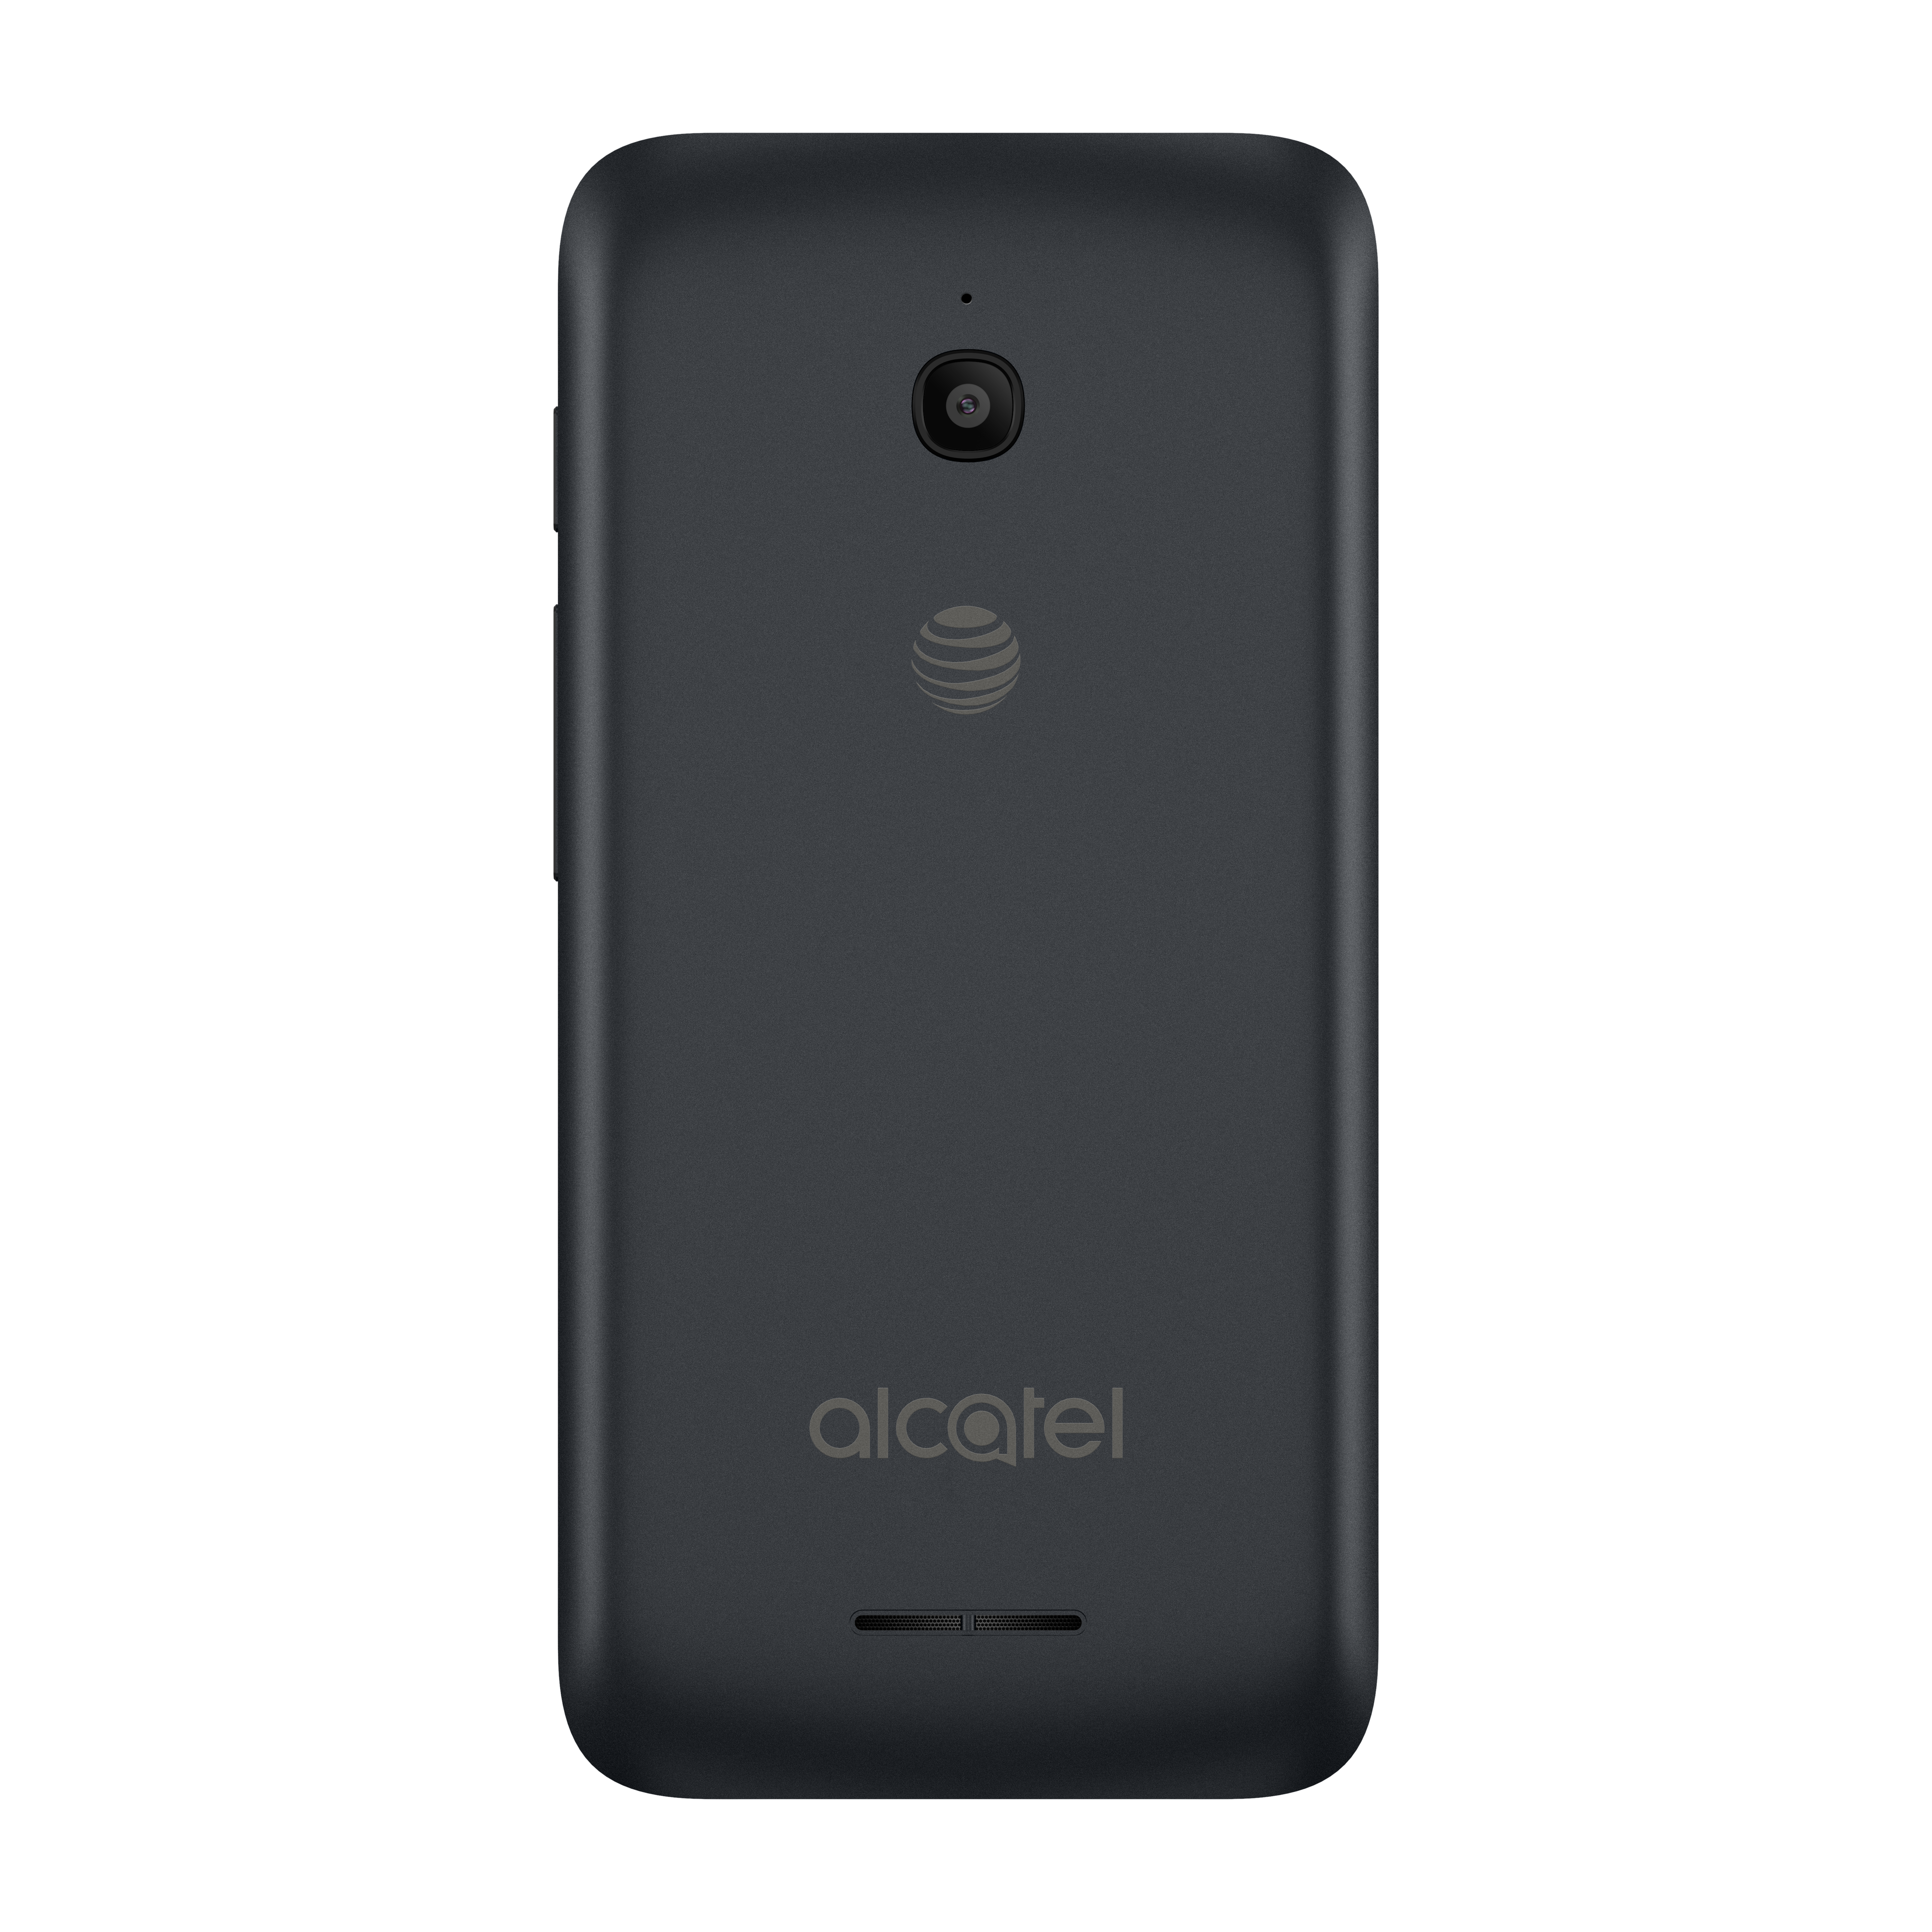 AT&T PREPAID Alcatel Ideal 8GB Prepaid Smartphone, Black - image 3 of 4